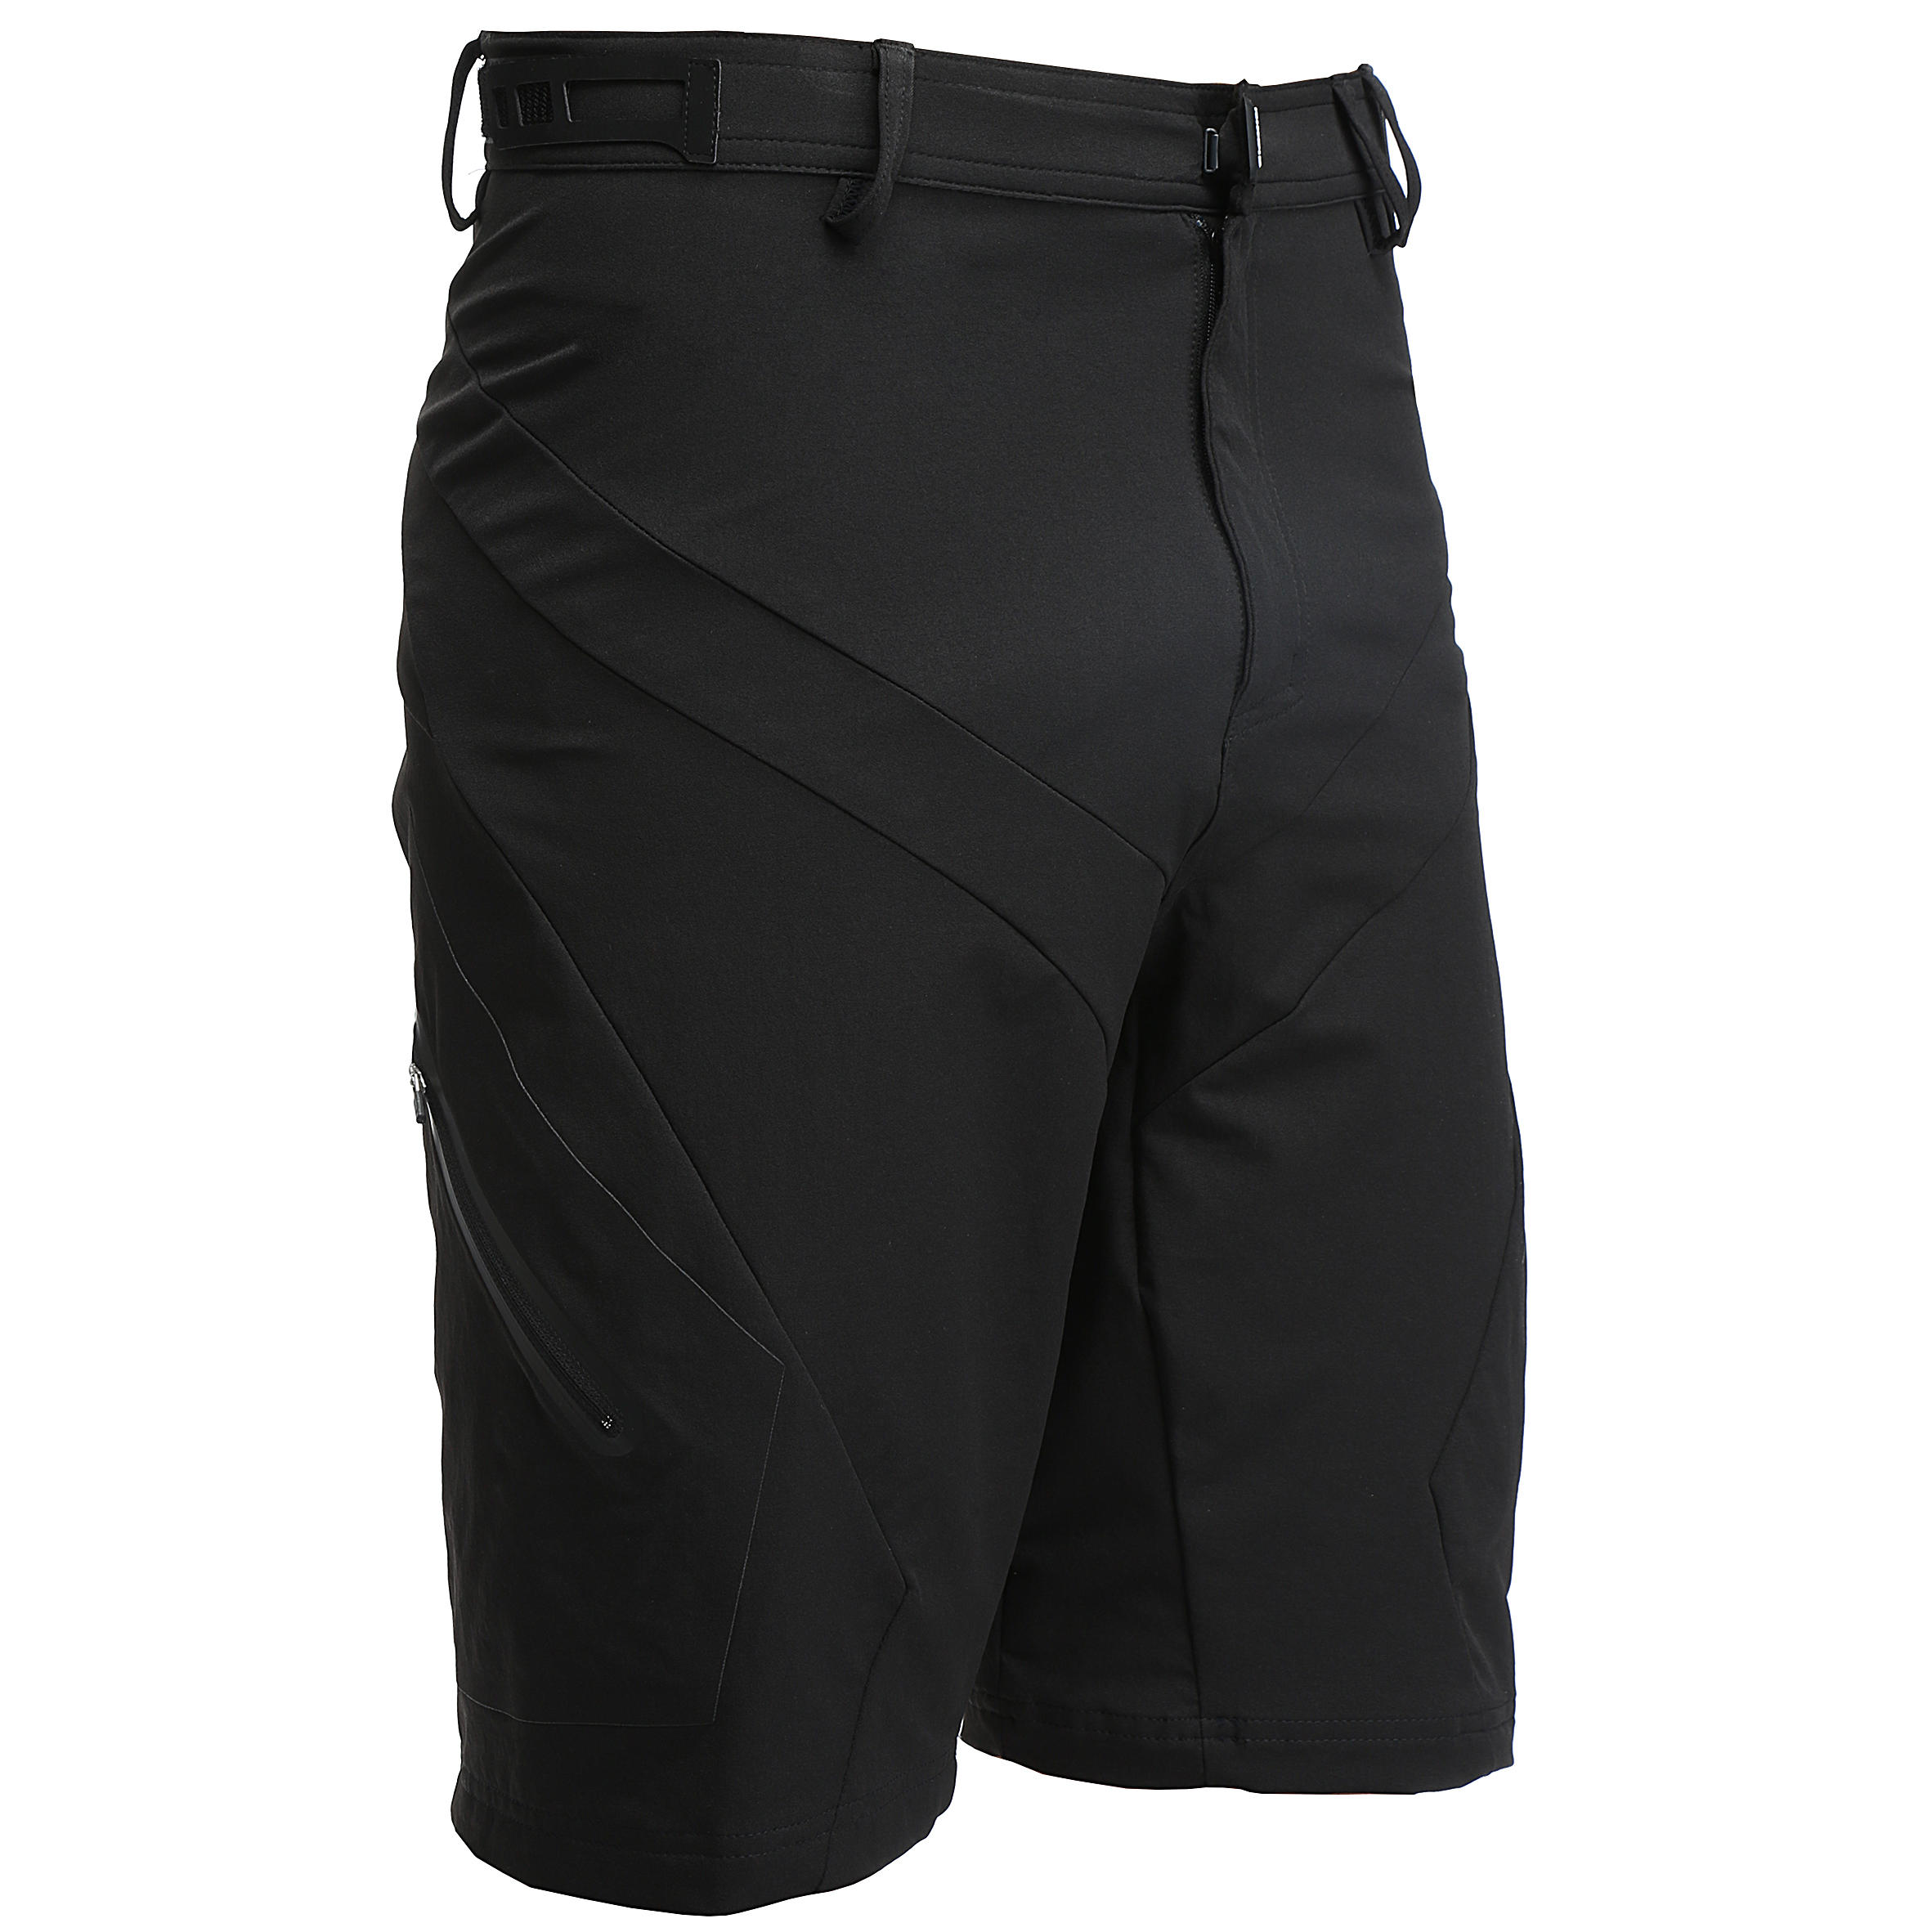 ROCKRIDER 700 Mountain Bike Shorts - Black